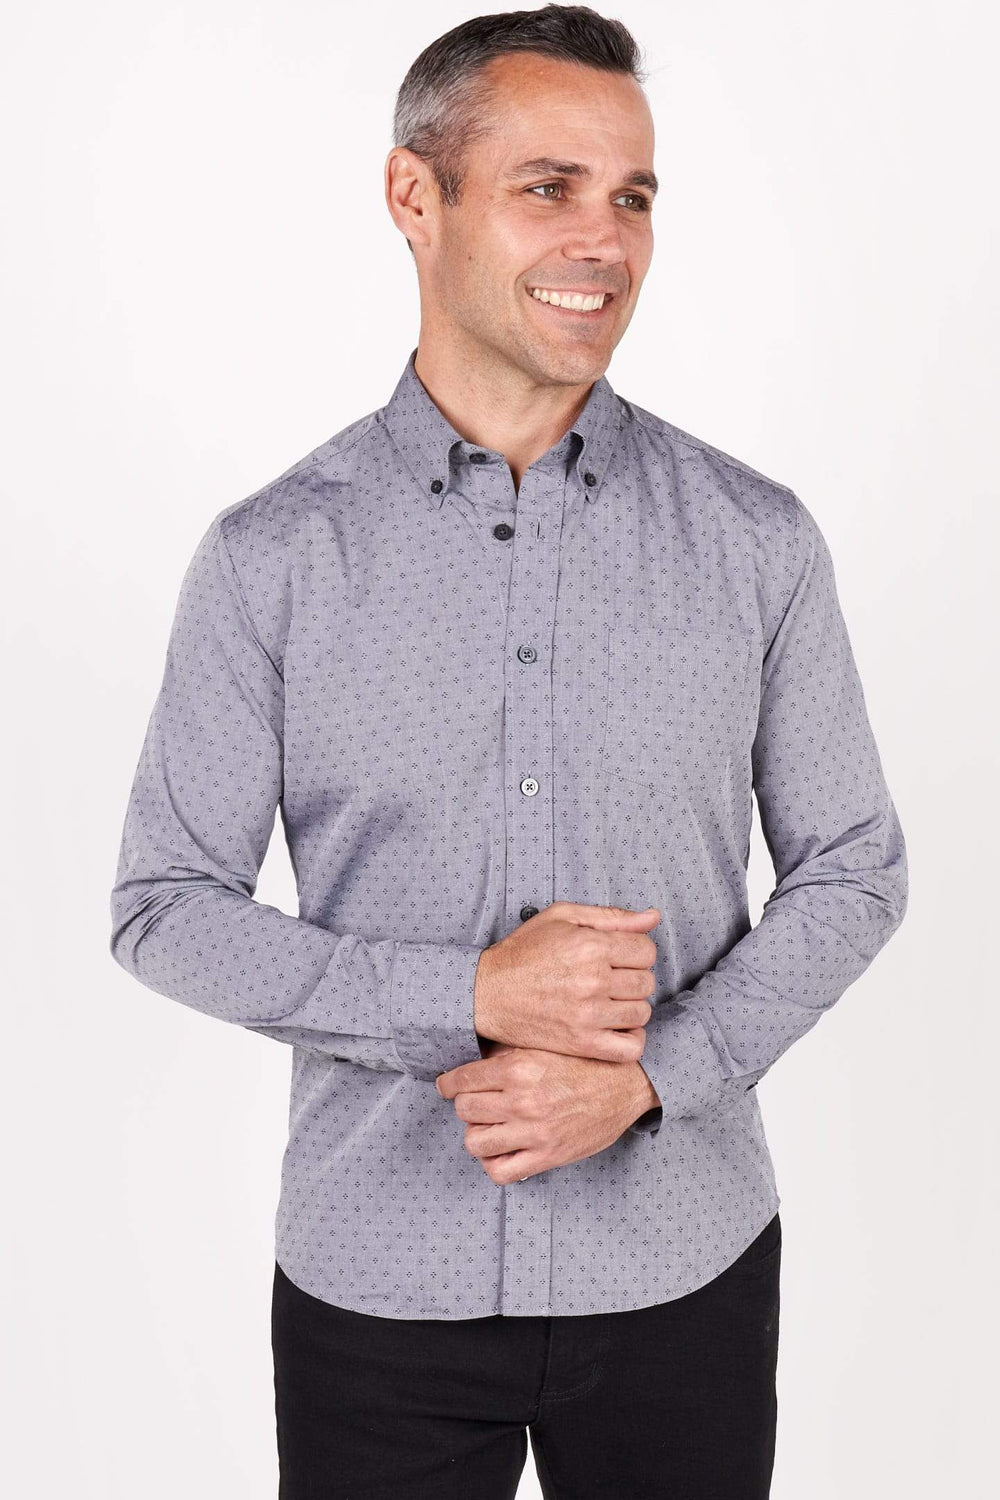 Buy Stargaze Gray Button-Down Shirt for Short Men | Ash & Erie   Everyday Shirts